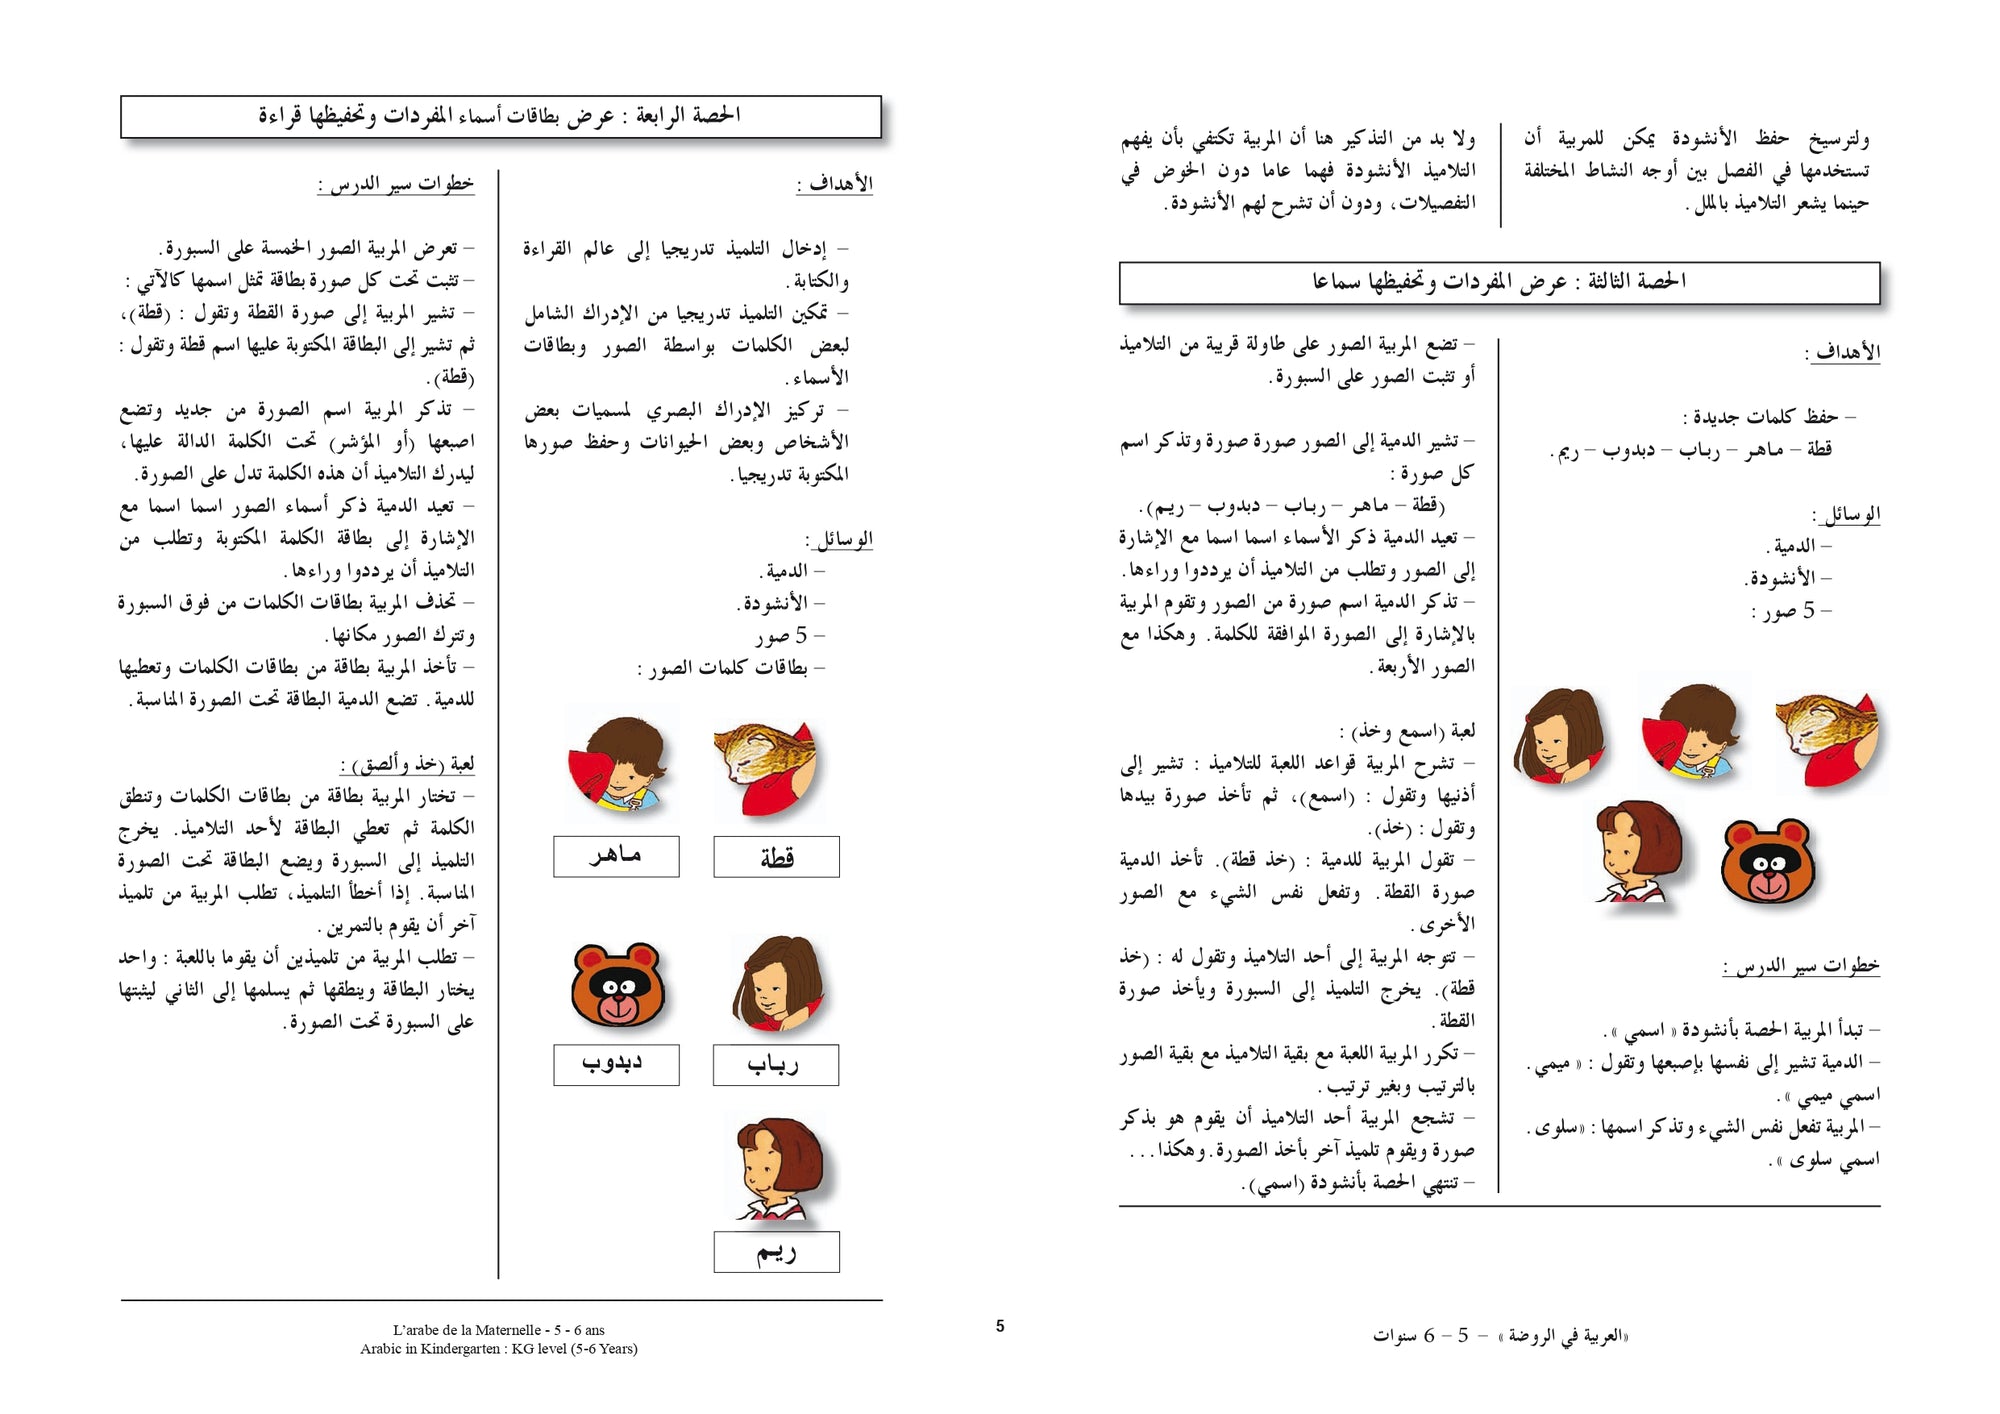 Arabic in Kindergarten Teacher Book Level KG